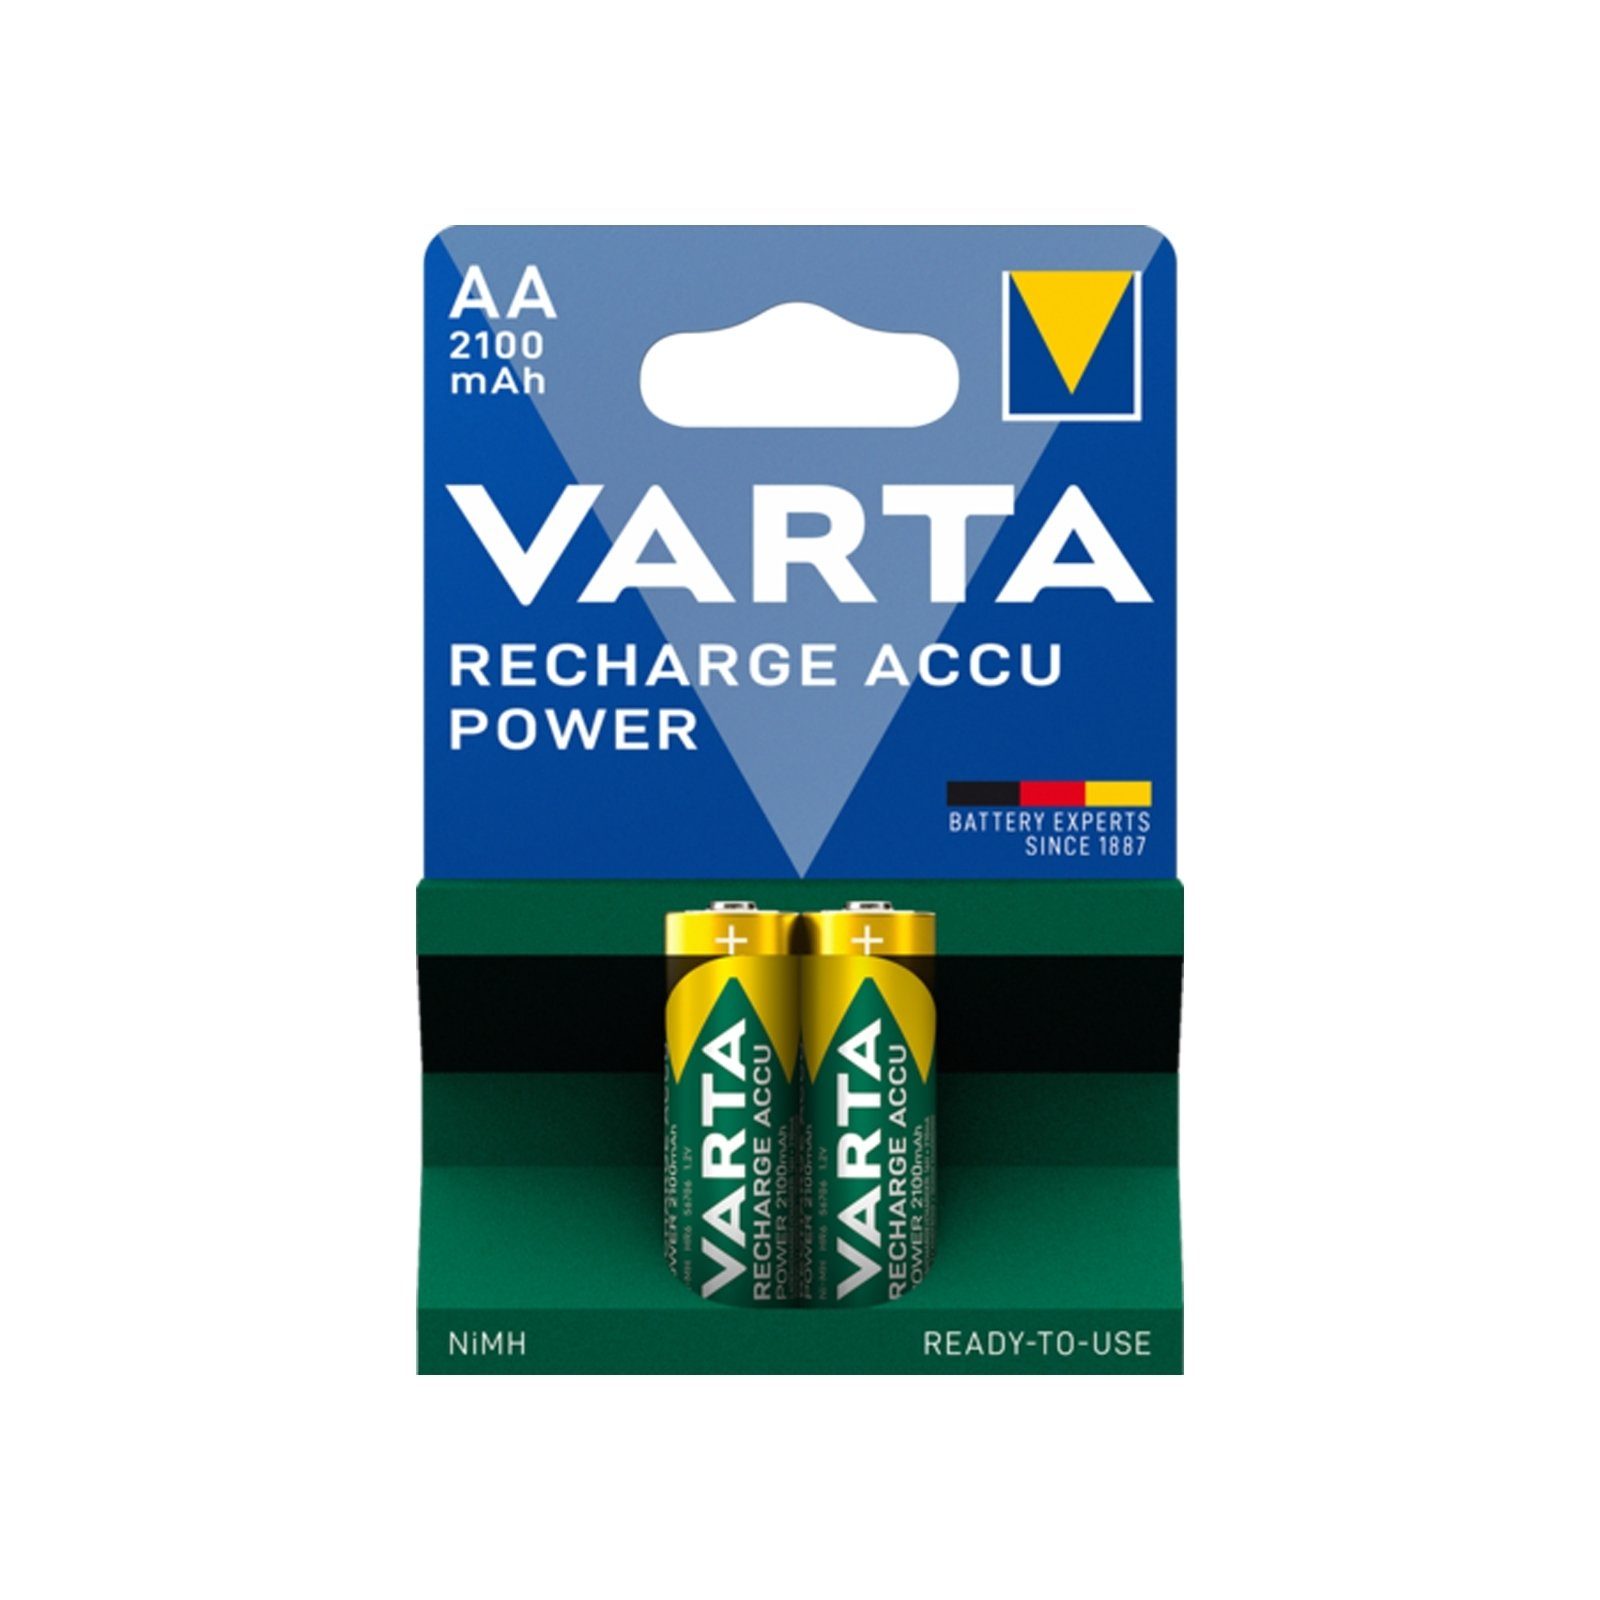 2100 2xAA VARTA Accu mAh Recharge Batterie Power